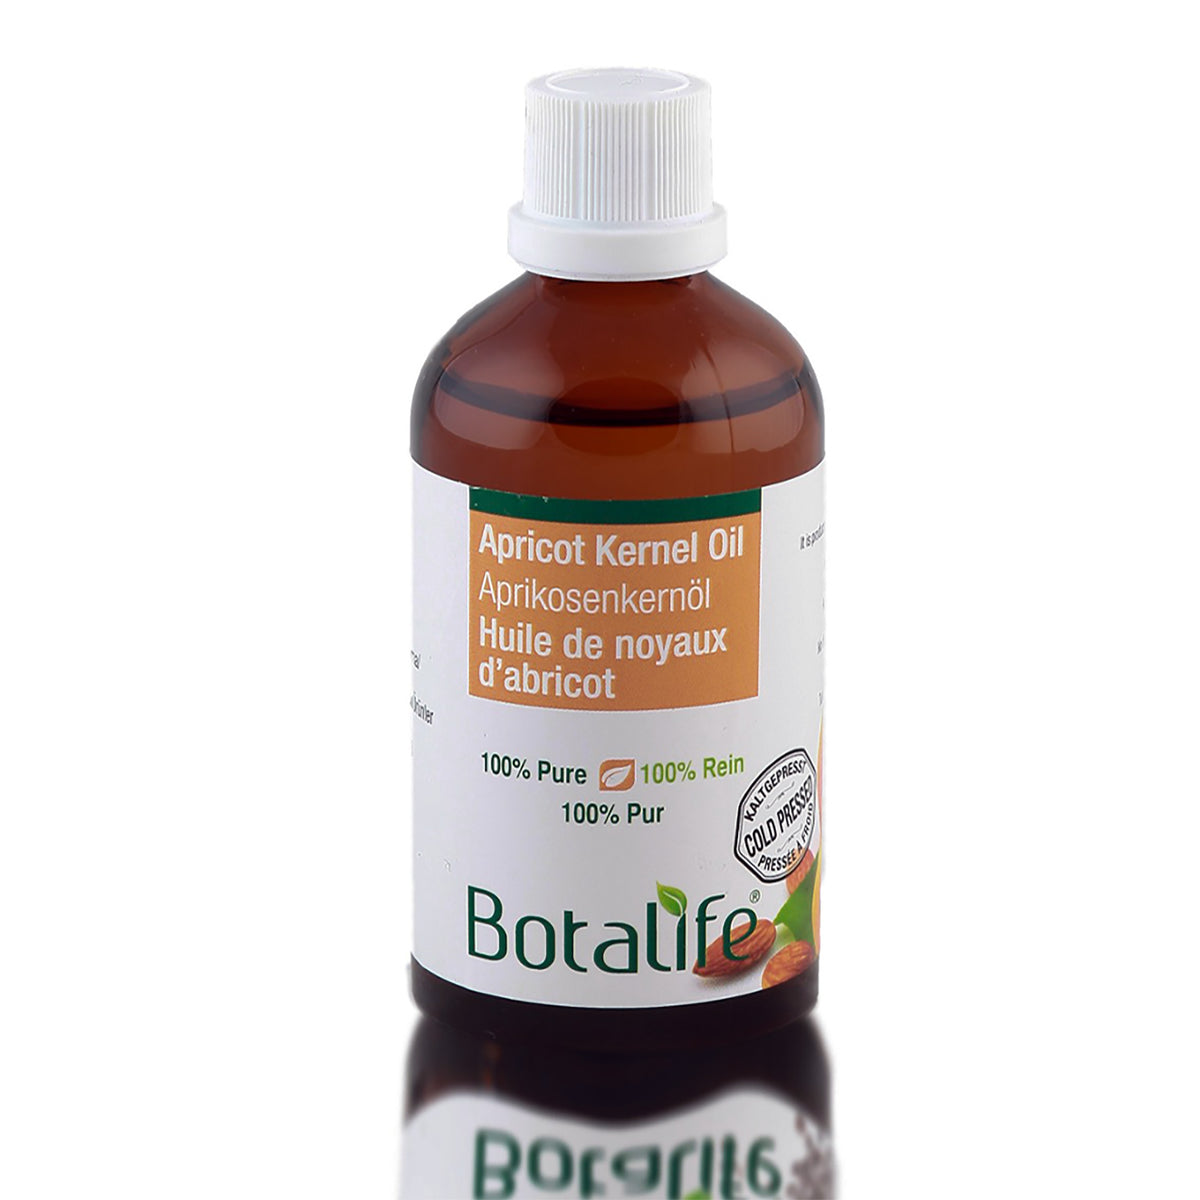 Botalife Apricot Kernel oil moisturizer